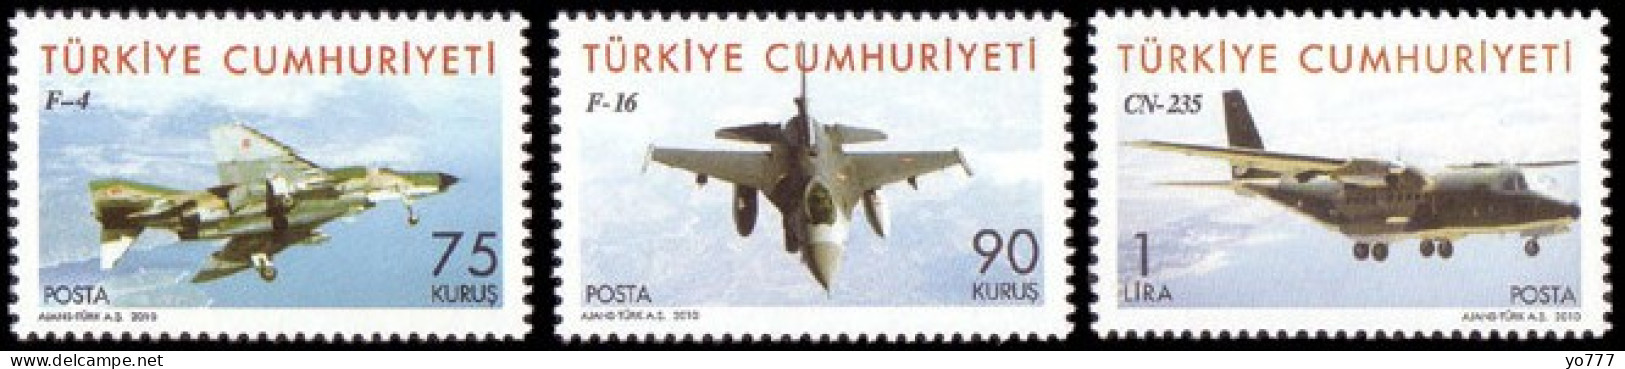 (3807-09) TURKEY AIRPLANES STAMPS SET MNH** - Nuevos